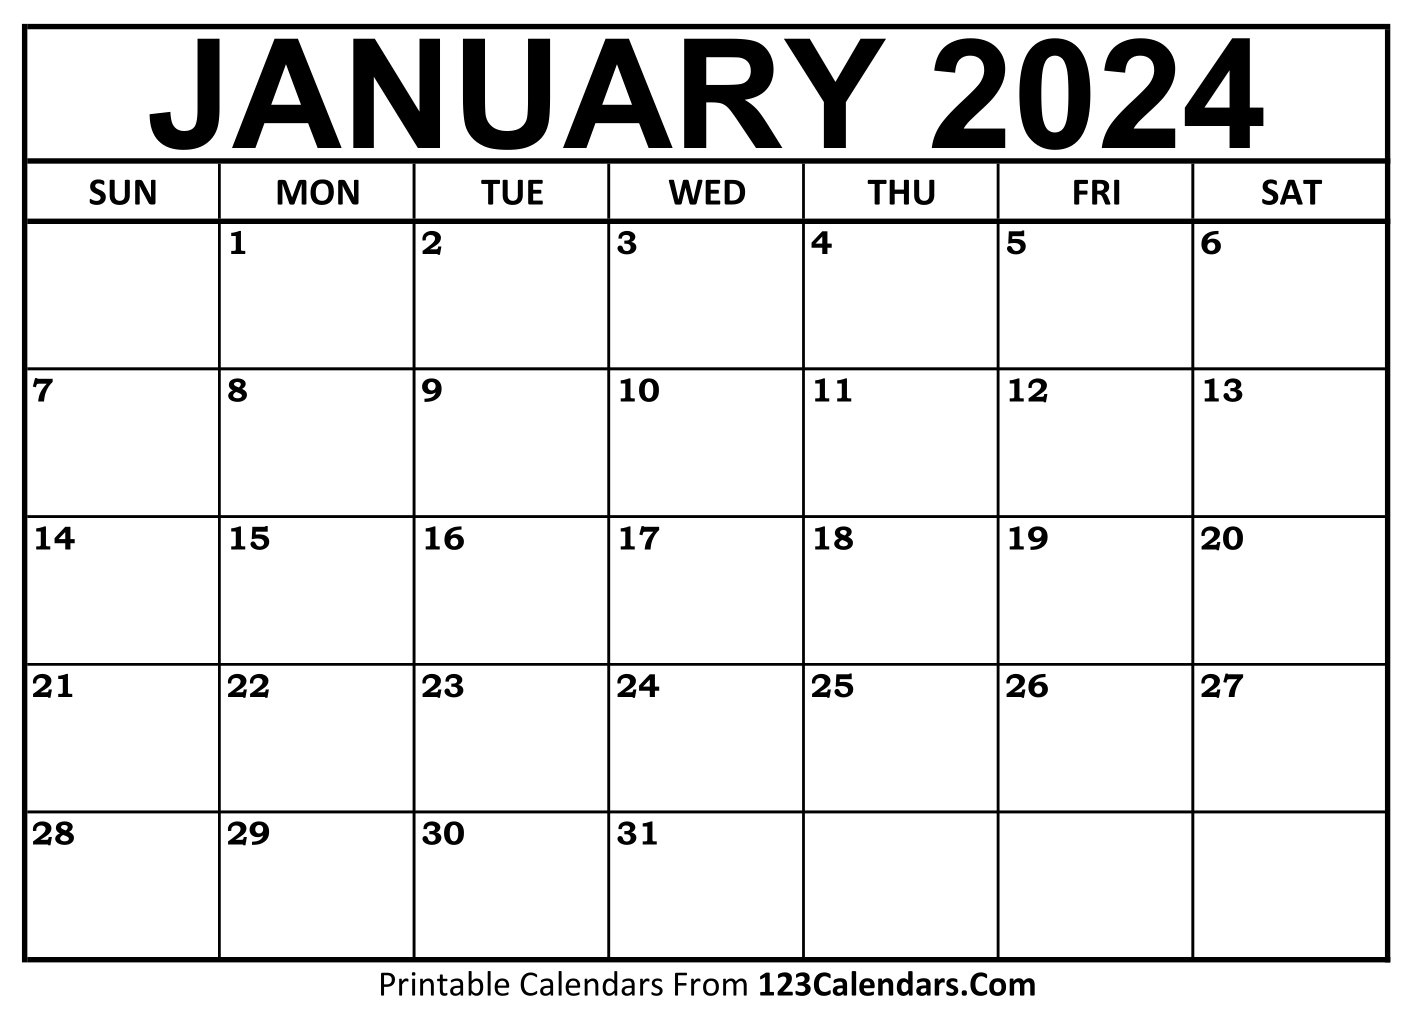 Printable January 2024 Calendar Templates - 123Calendars | Printable Calendar 2024 Monthly Free